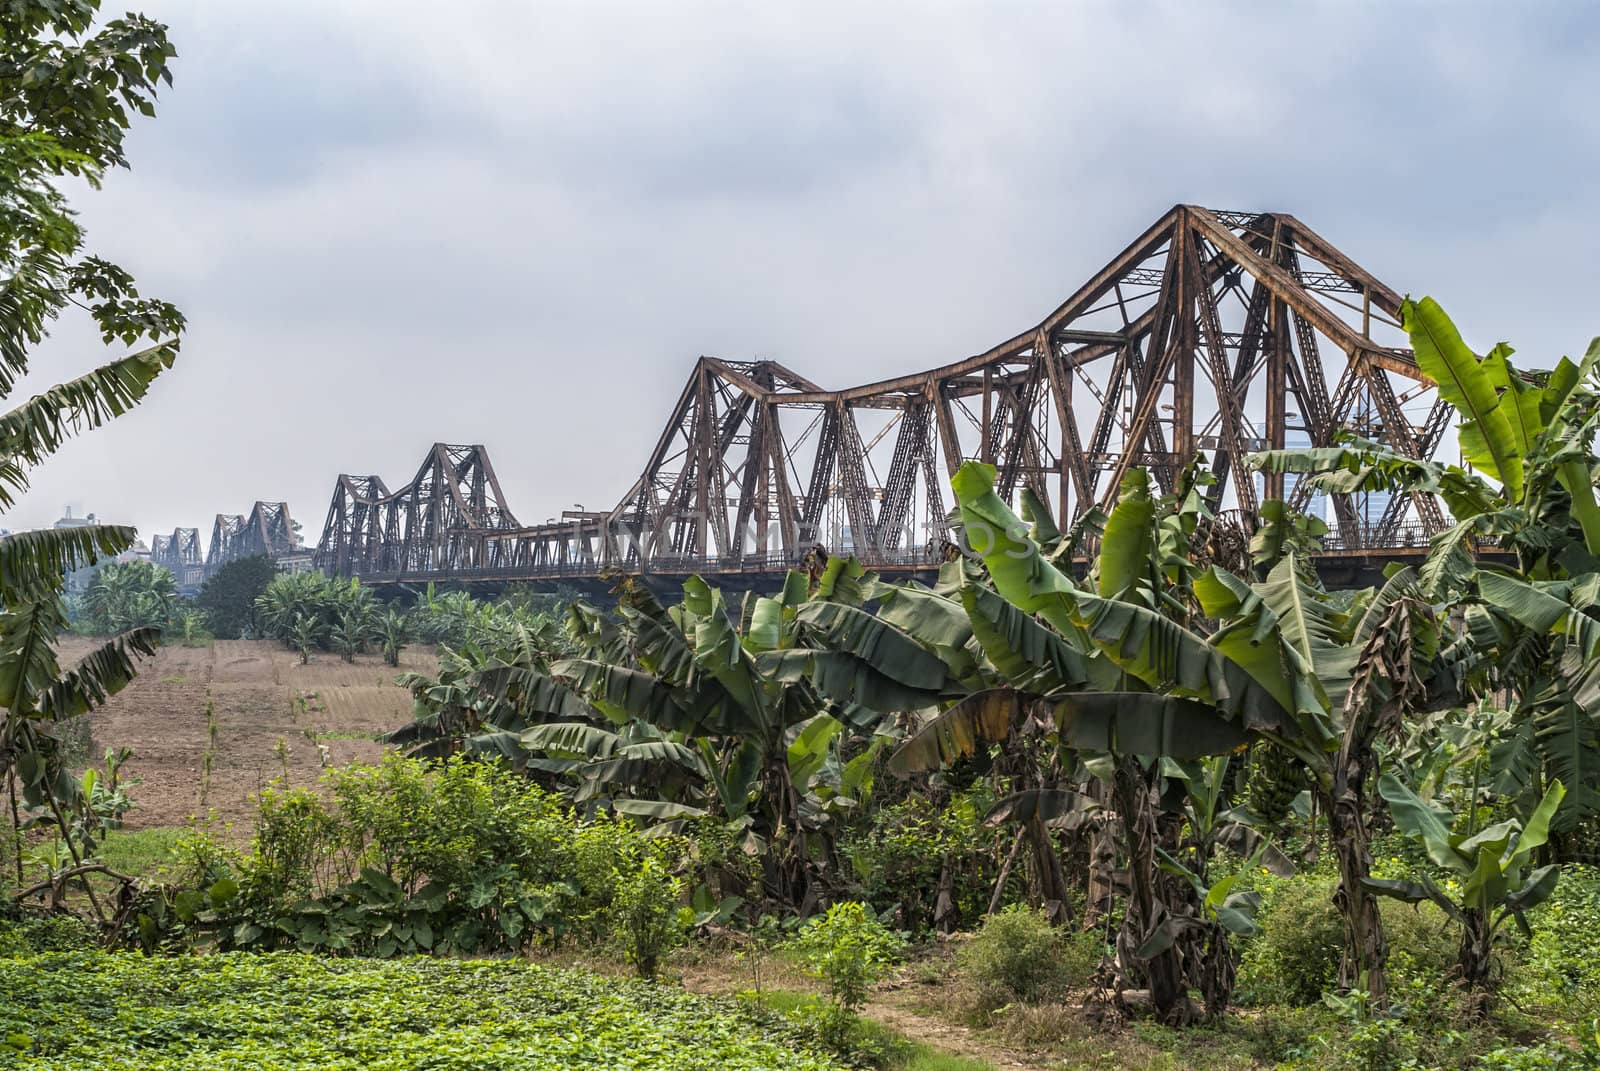 Vietnam Hanoi. Long historic metal bridge over banana plantation under light blue skies.